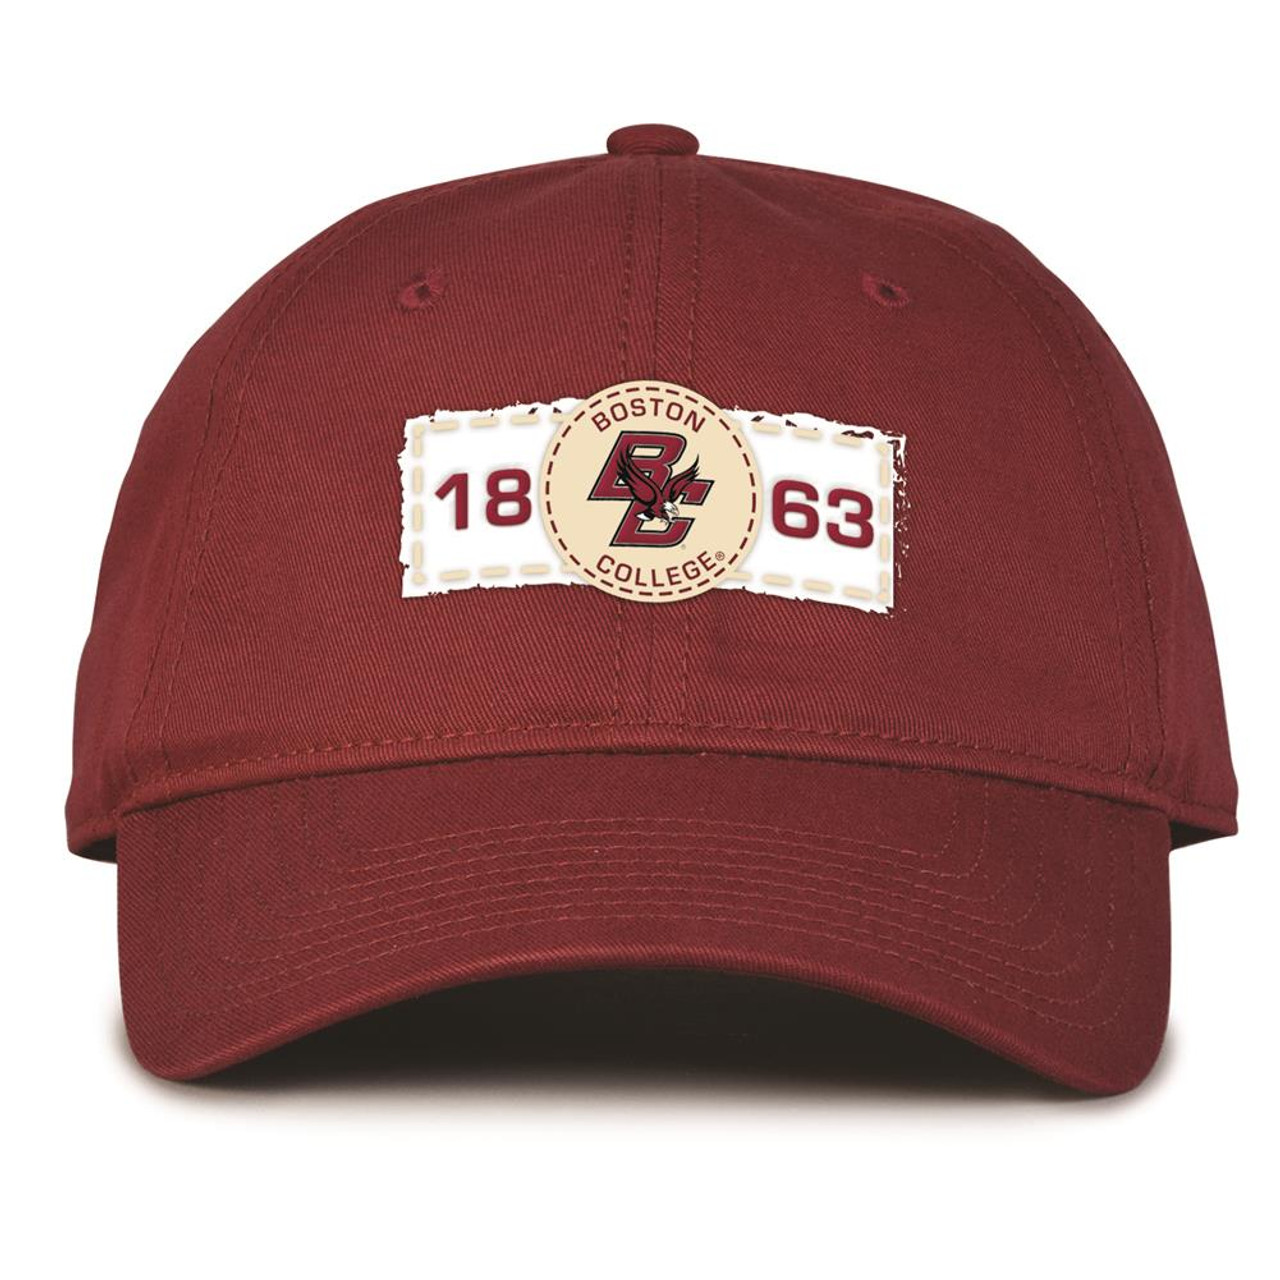 Vintage Anaheim Angels Youth Snapback Hat Brushed